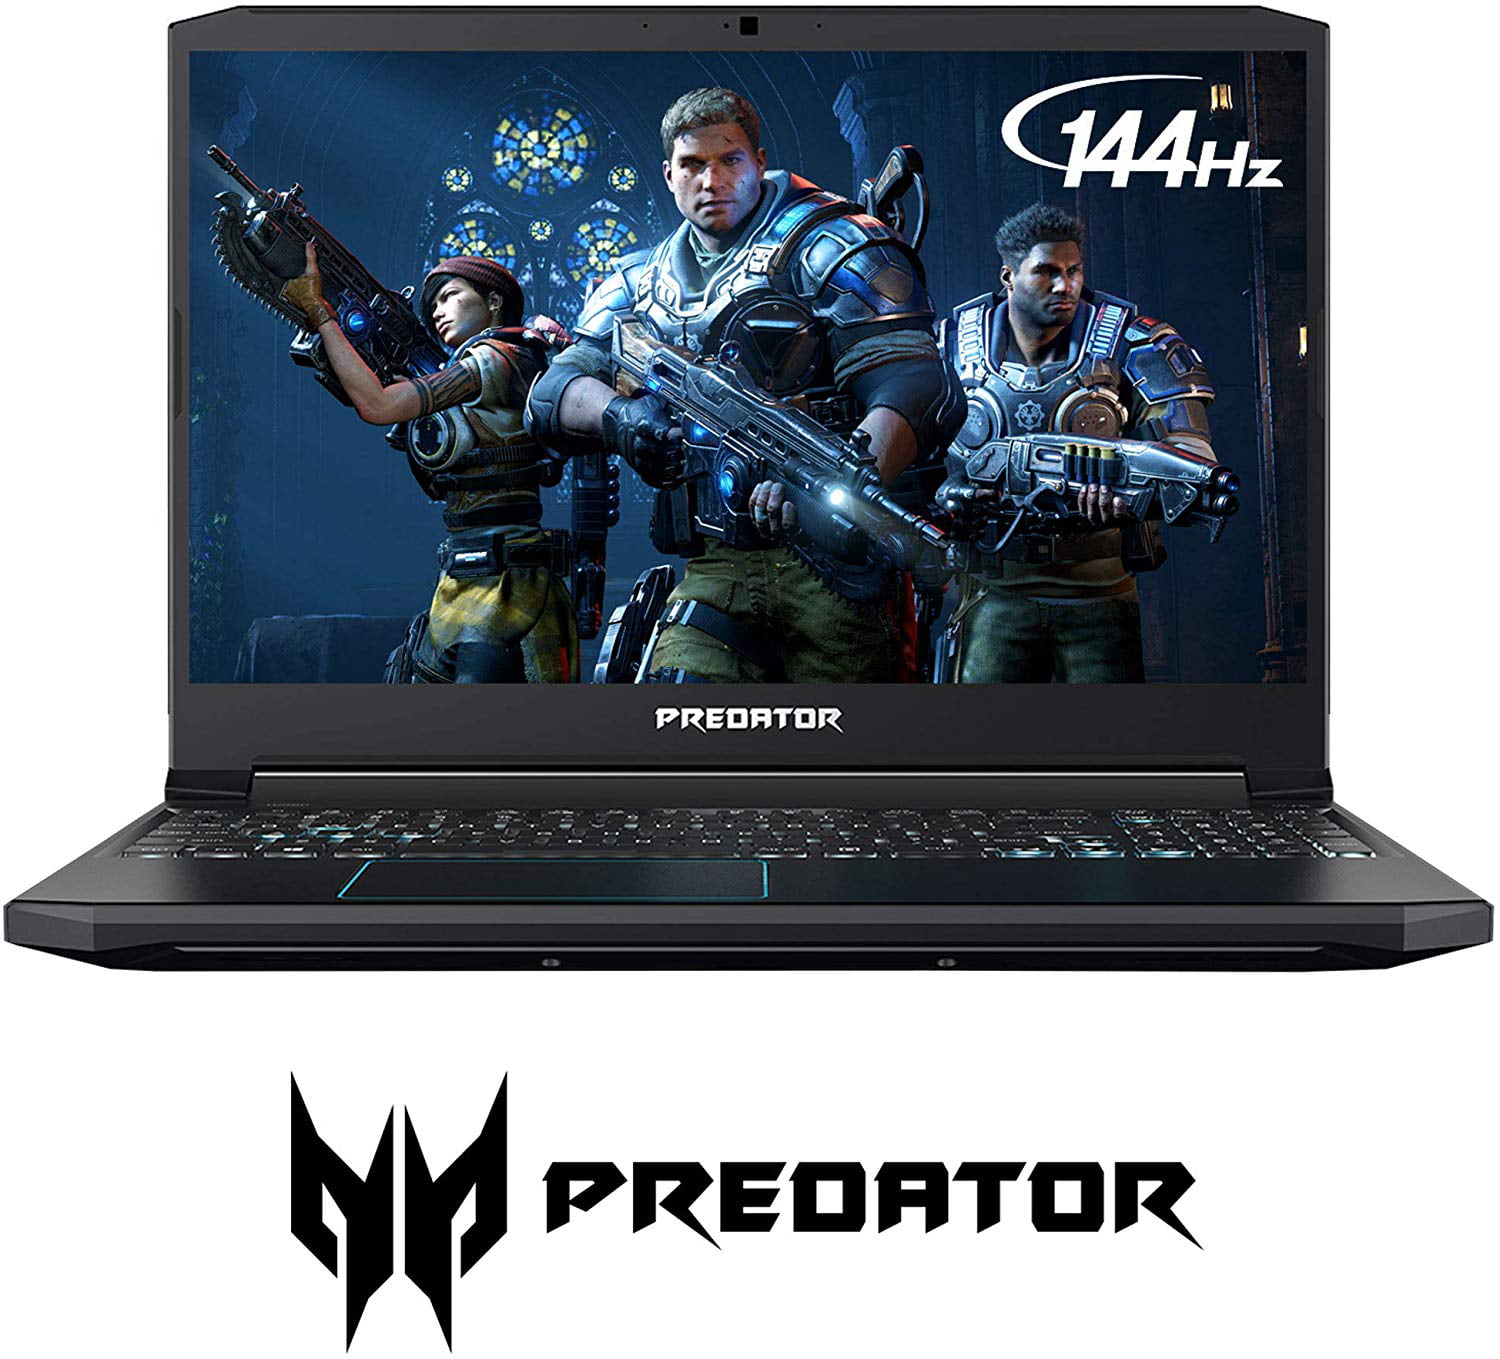 Acer Predator Helios 300 Gaming Laptop PC, 15.6 inches Full HD 144Hz 3ms IPS Display, i7-9750H, GTX 1660 Ti 6GB, 16GB DDR4, 256GB PCIe NVMe SSD, Backlit Keyboard, PH315-52-78VL - Walmart.com